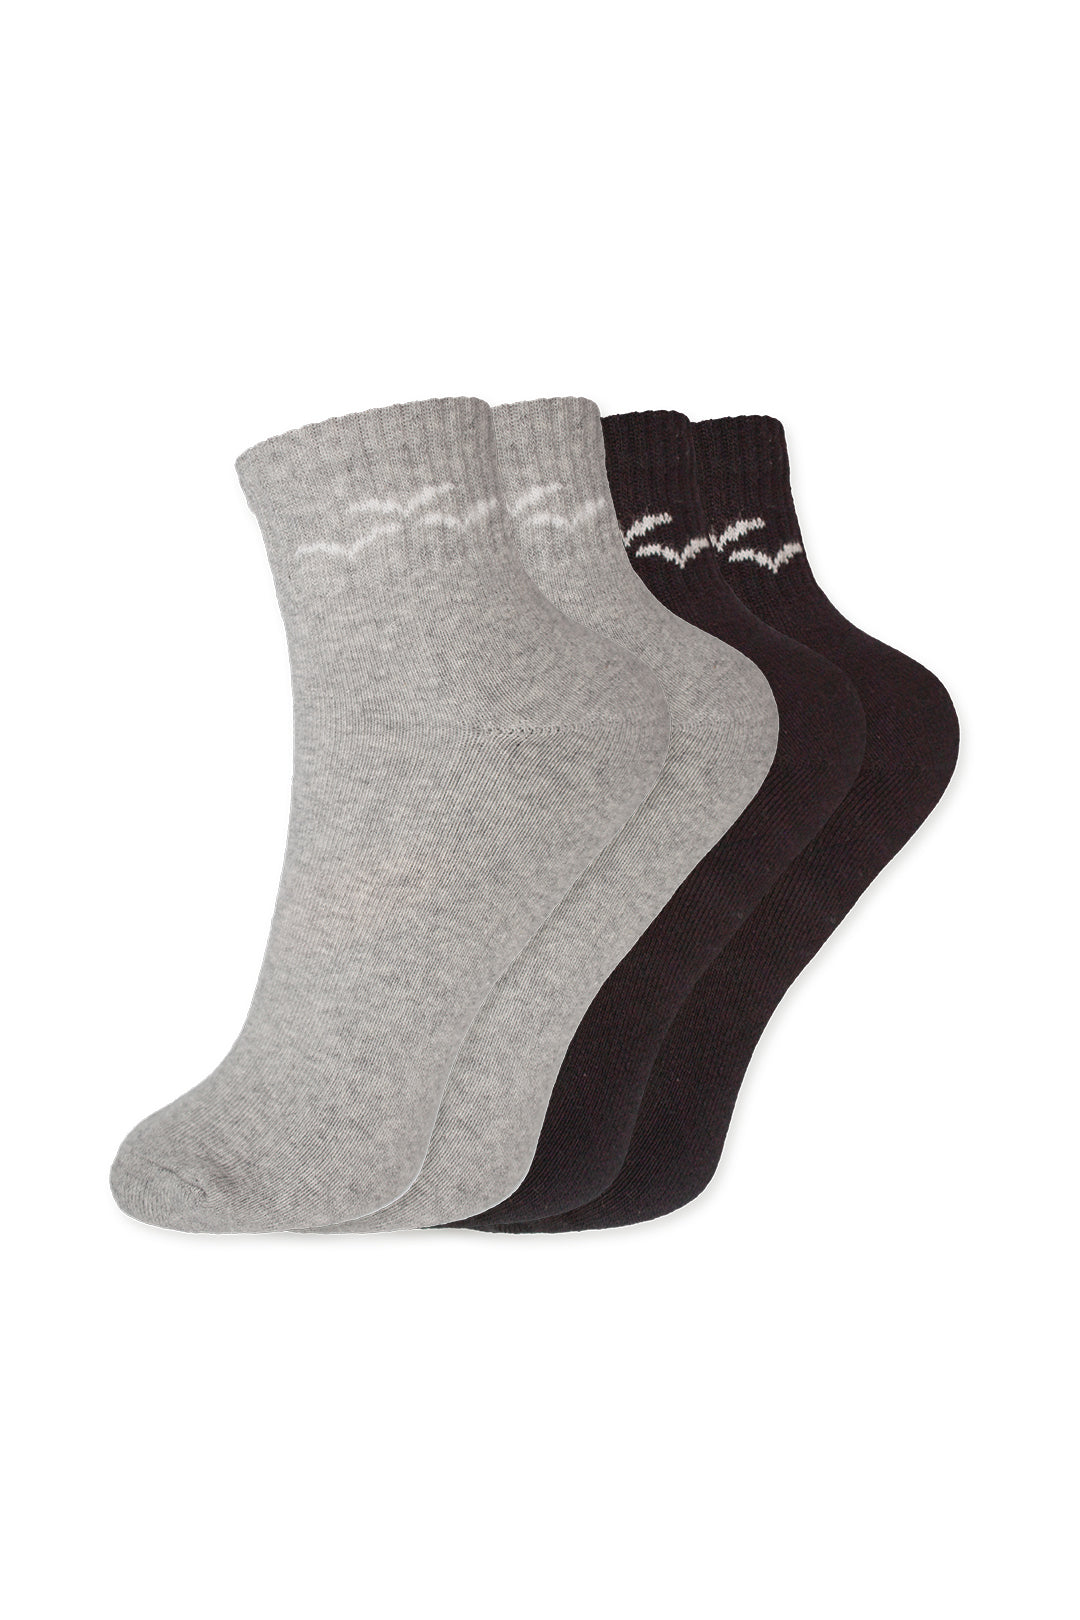 Lazy 2-Pack ankle socks grey/black combo